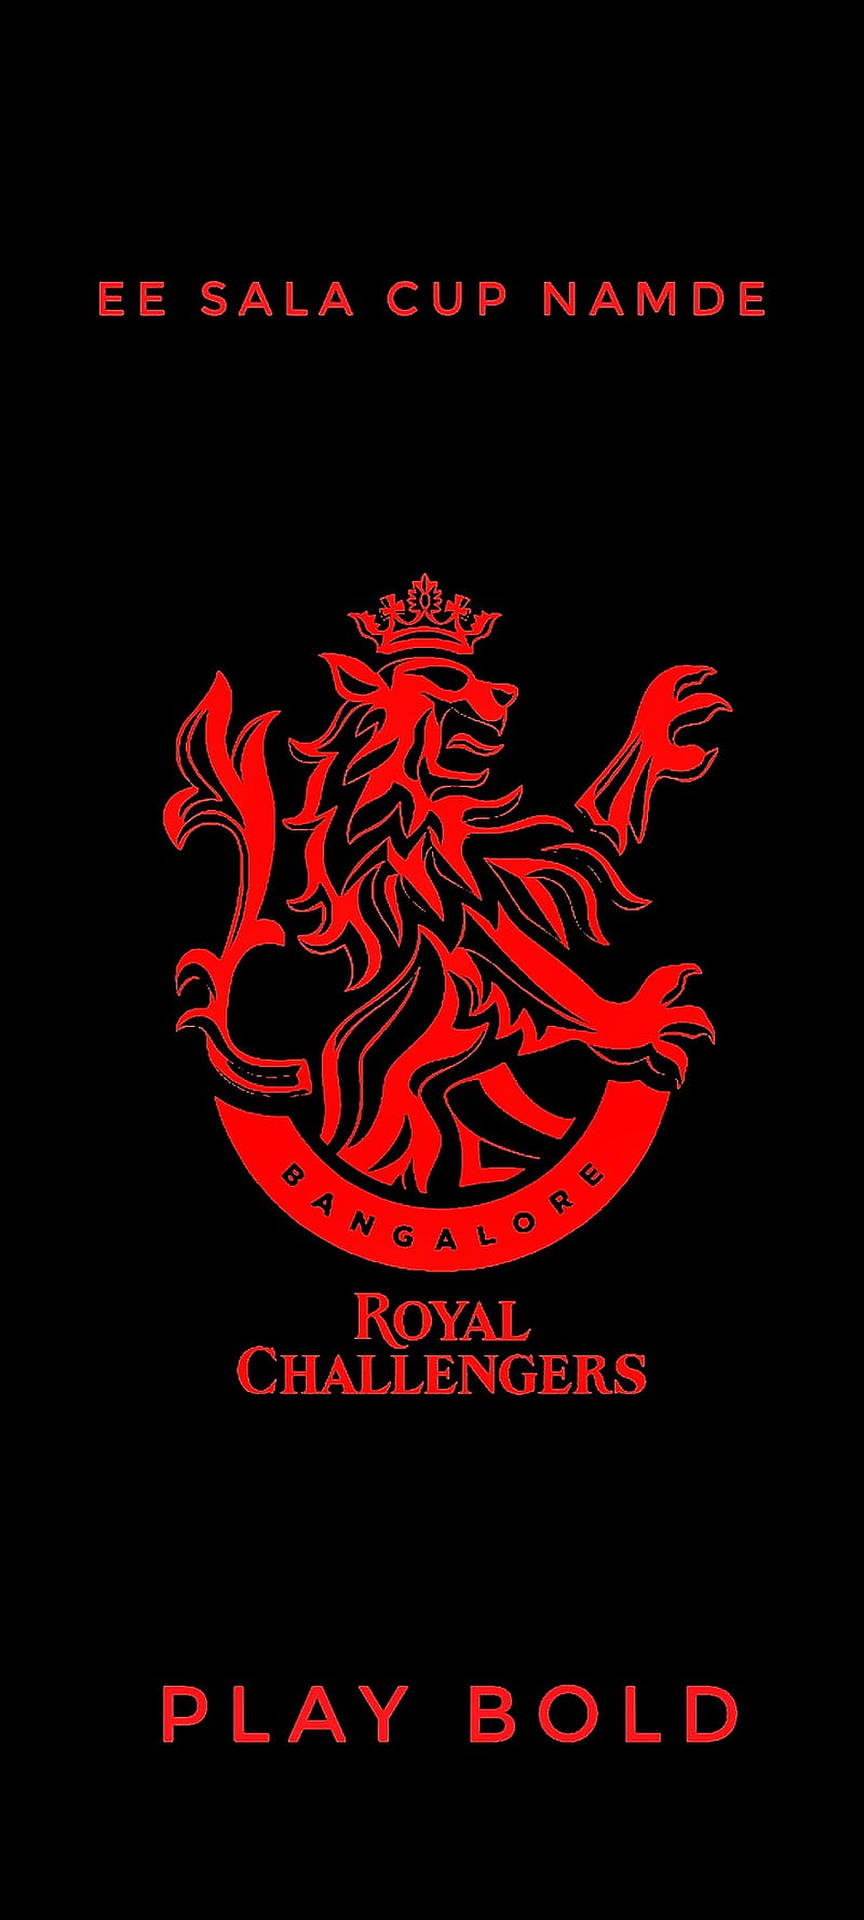 Royal Challengers Bangalore Ee Sala Cup Namde